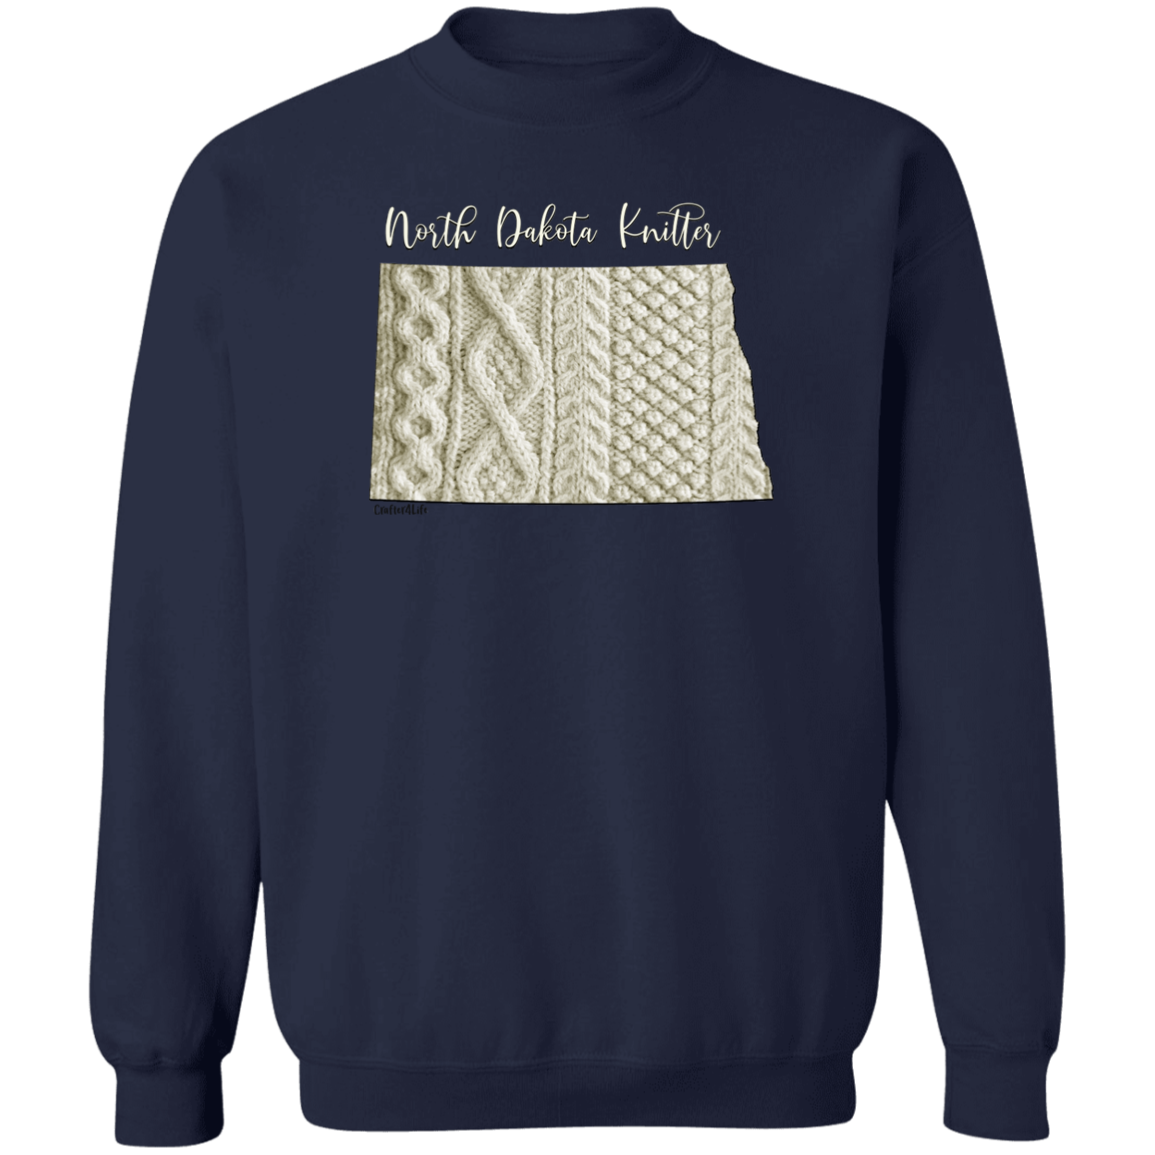 North Dakota Knitter Crewneck Pullover Sweatshirt